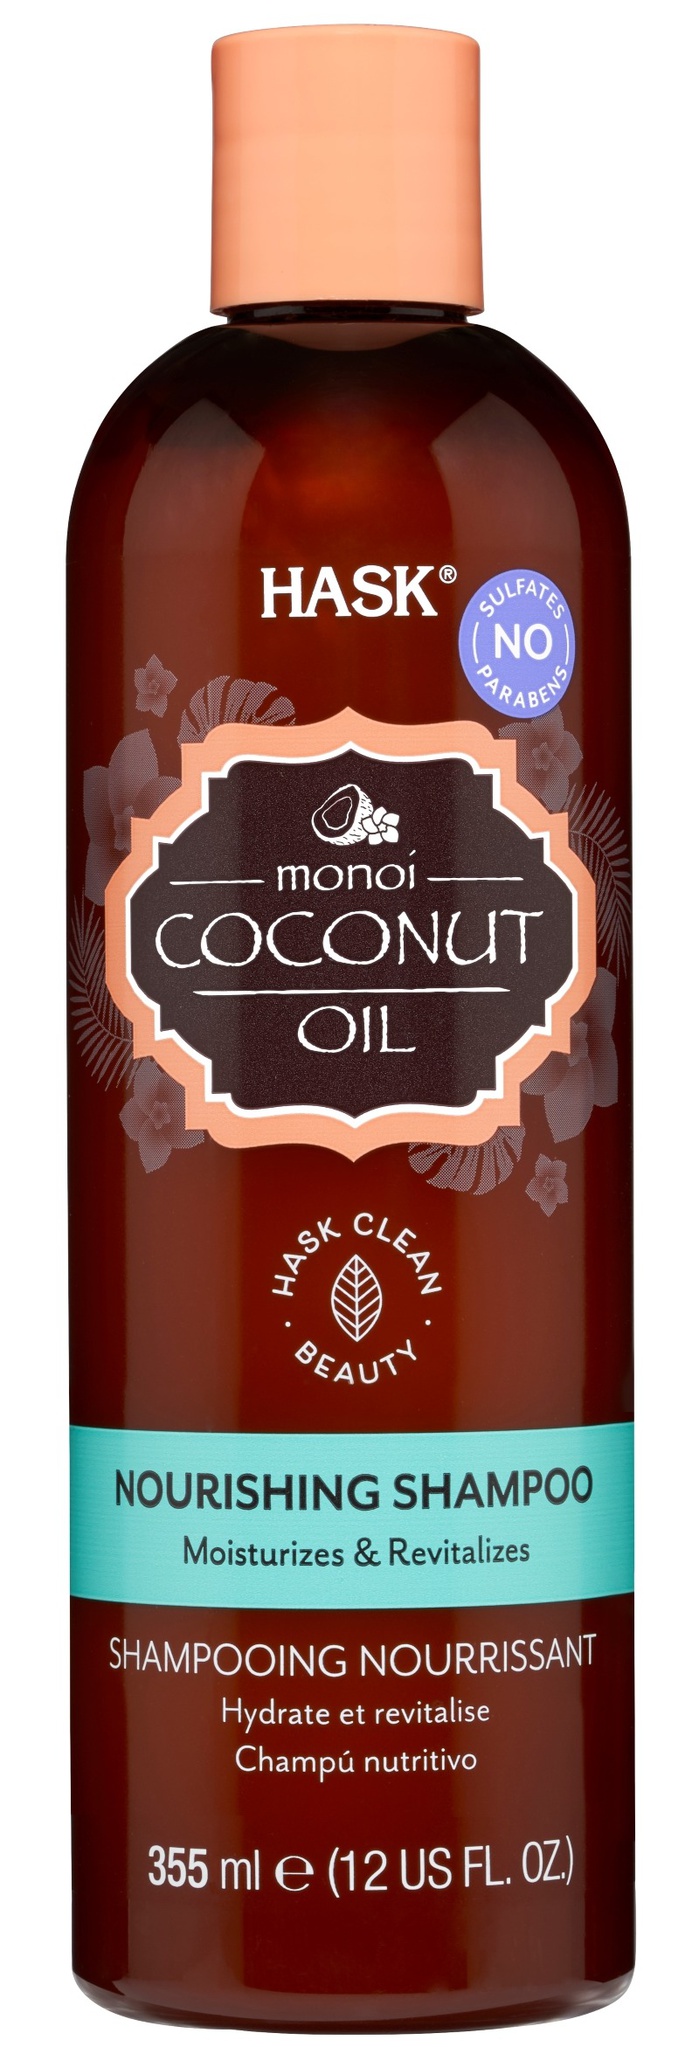 HASK Monoi Coconut Oil Nourishing Shampoo